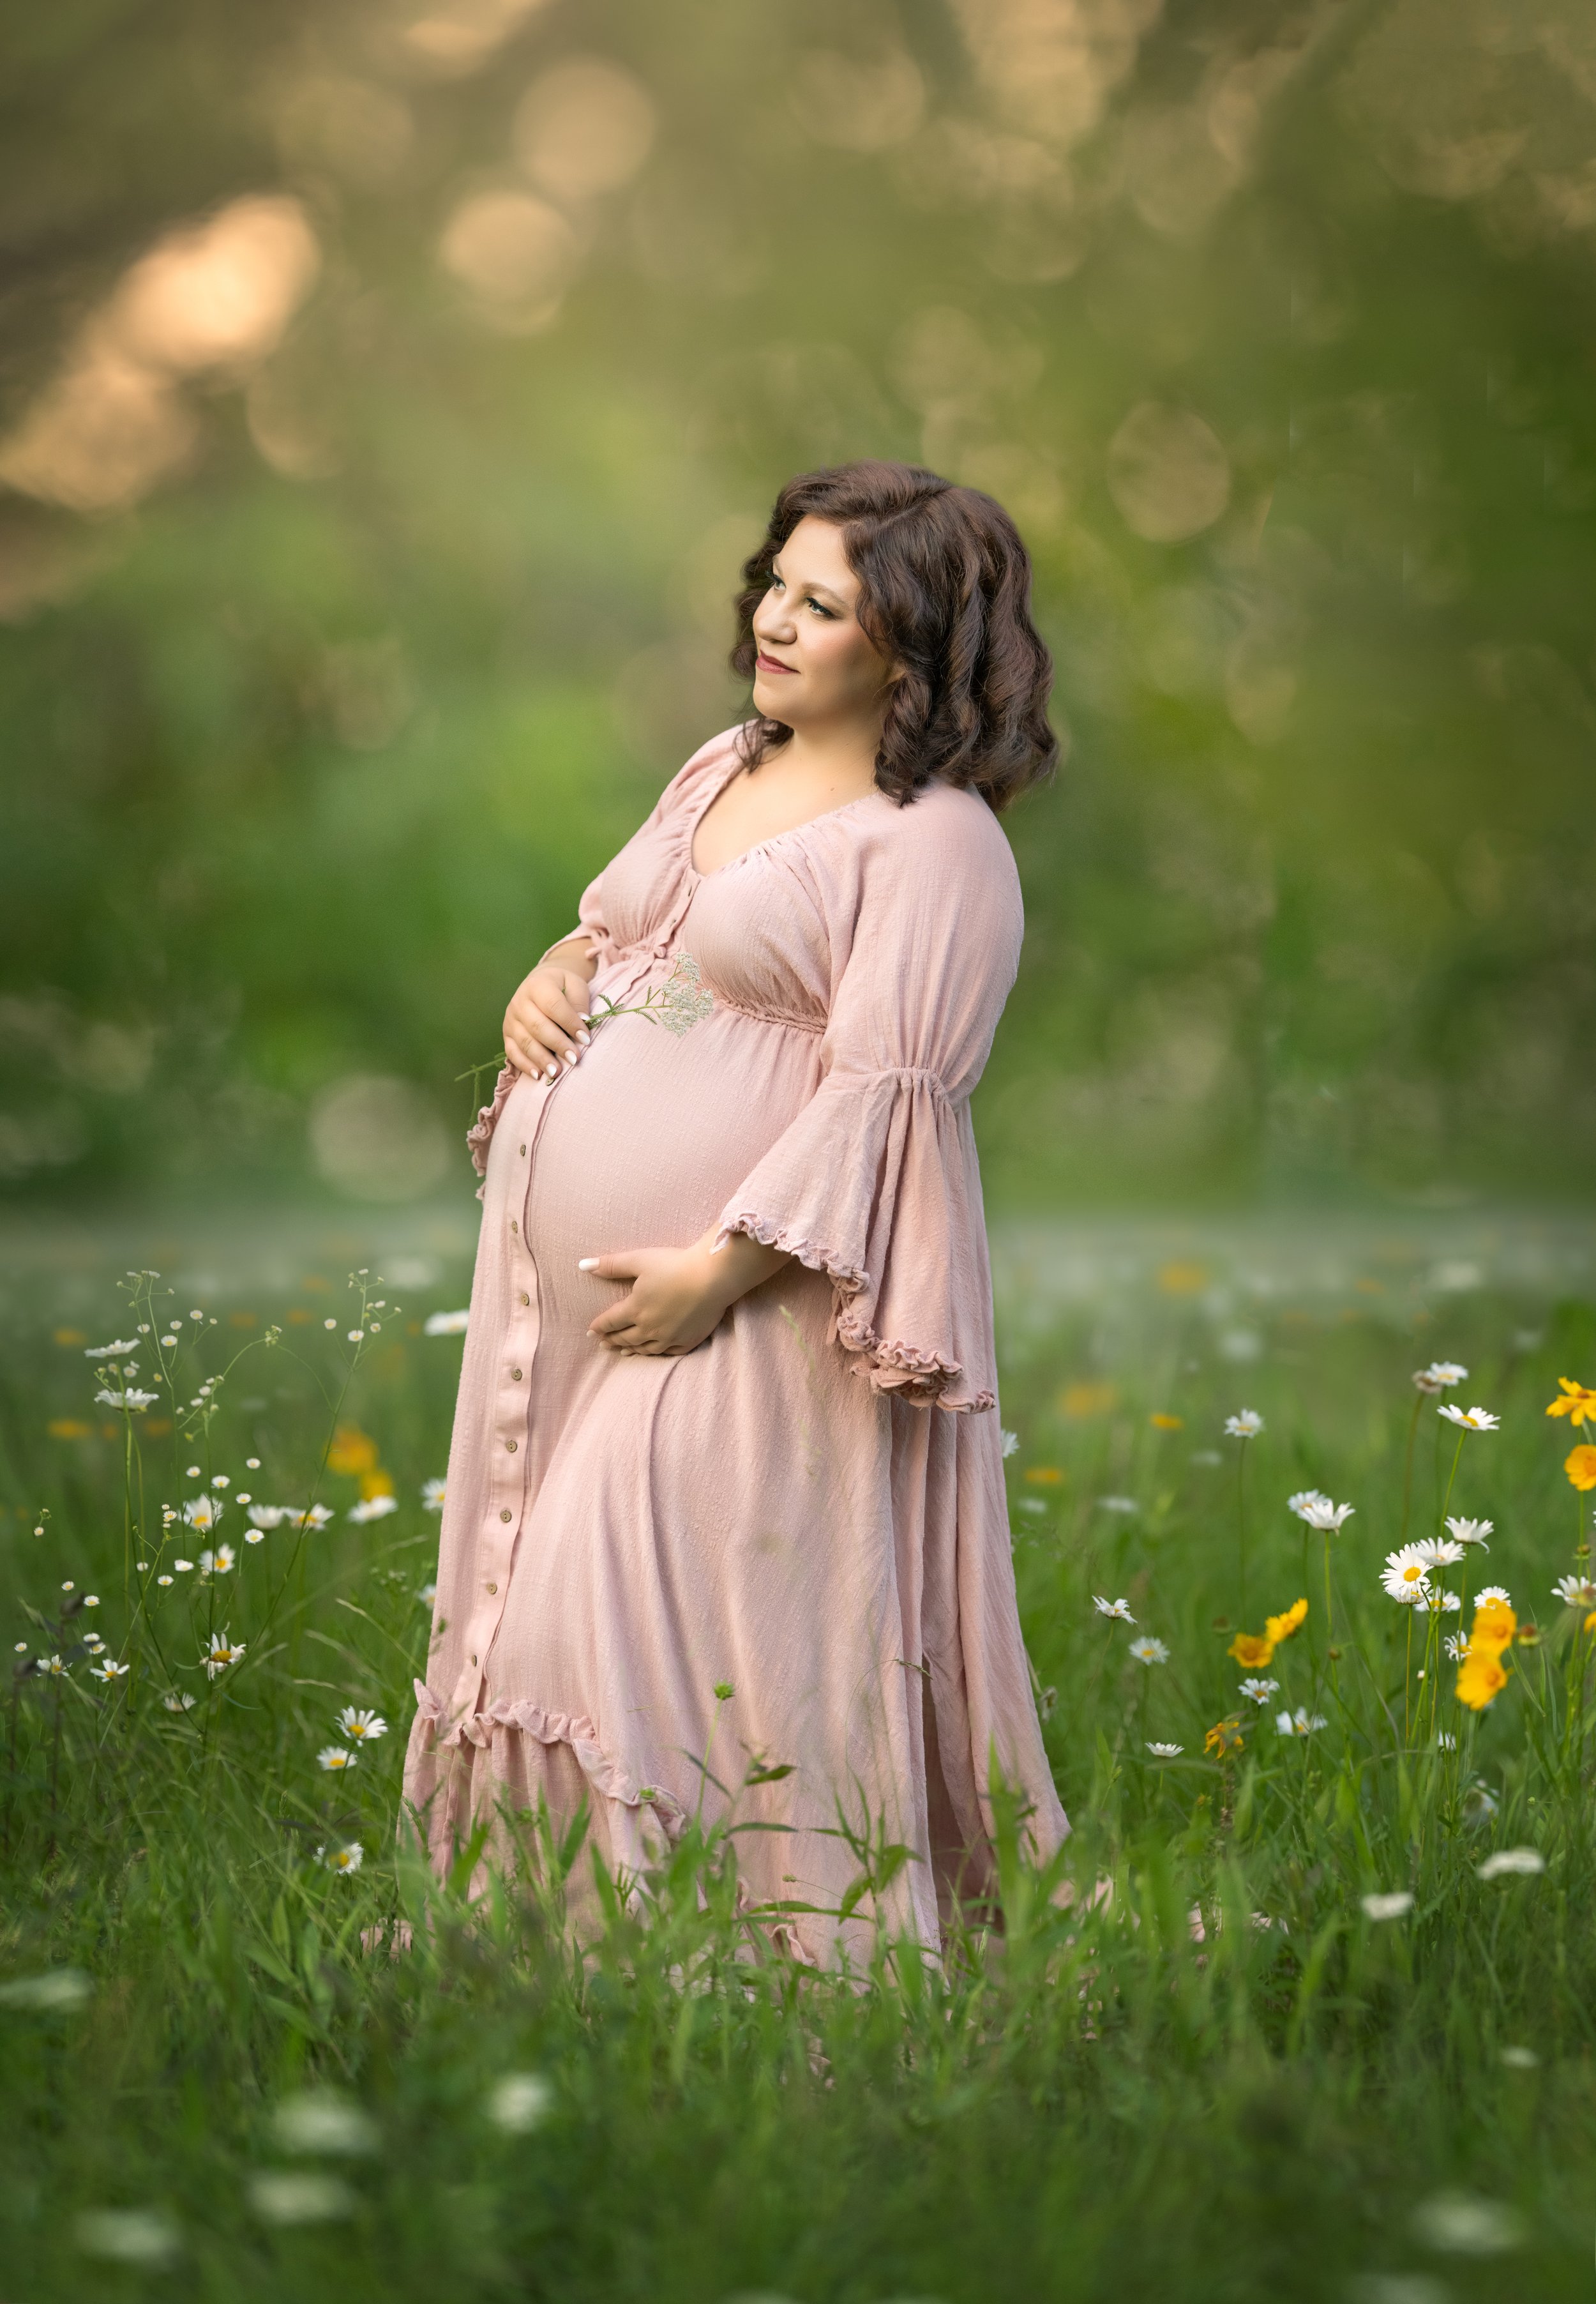 Magnolia Grey Images - Clarksville, TN Maternity & Newborn Photographer